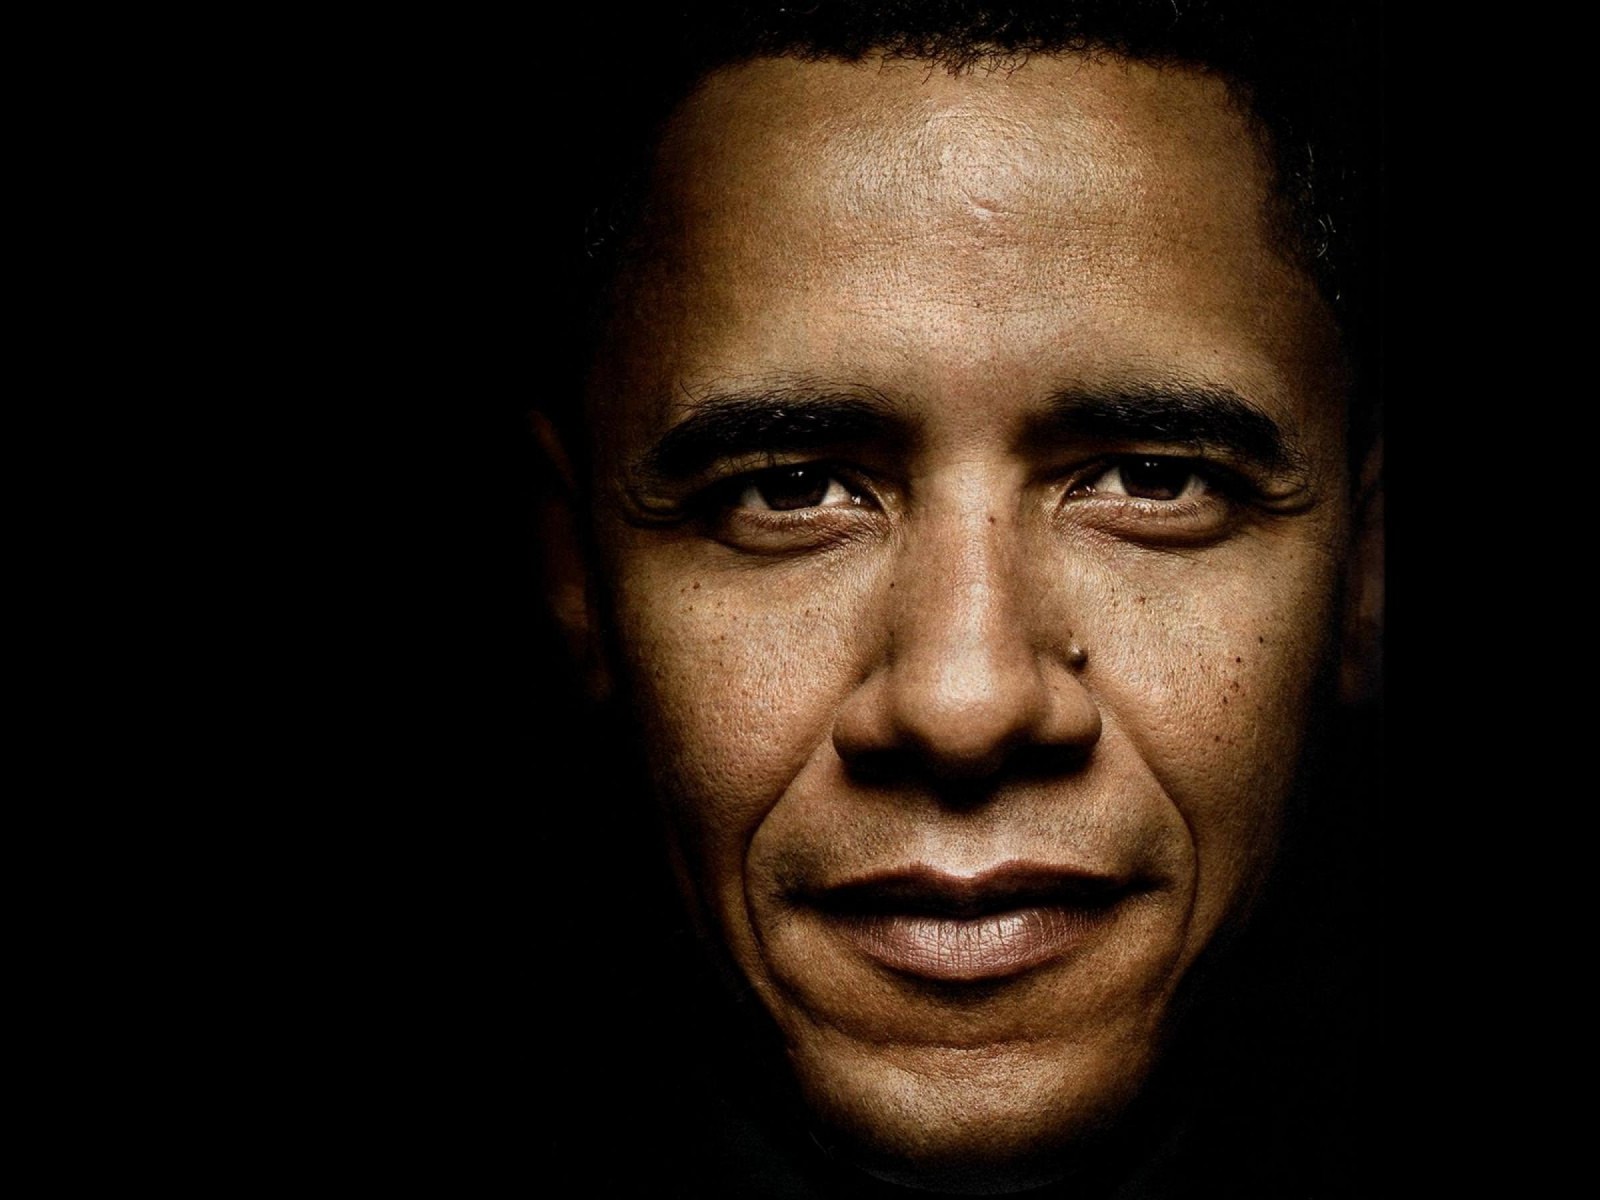 President Barack Obama Portrait Wallpaper for Desktop 1600x1200